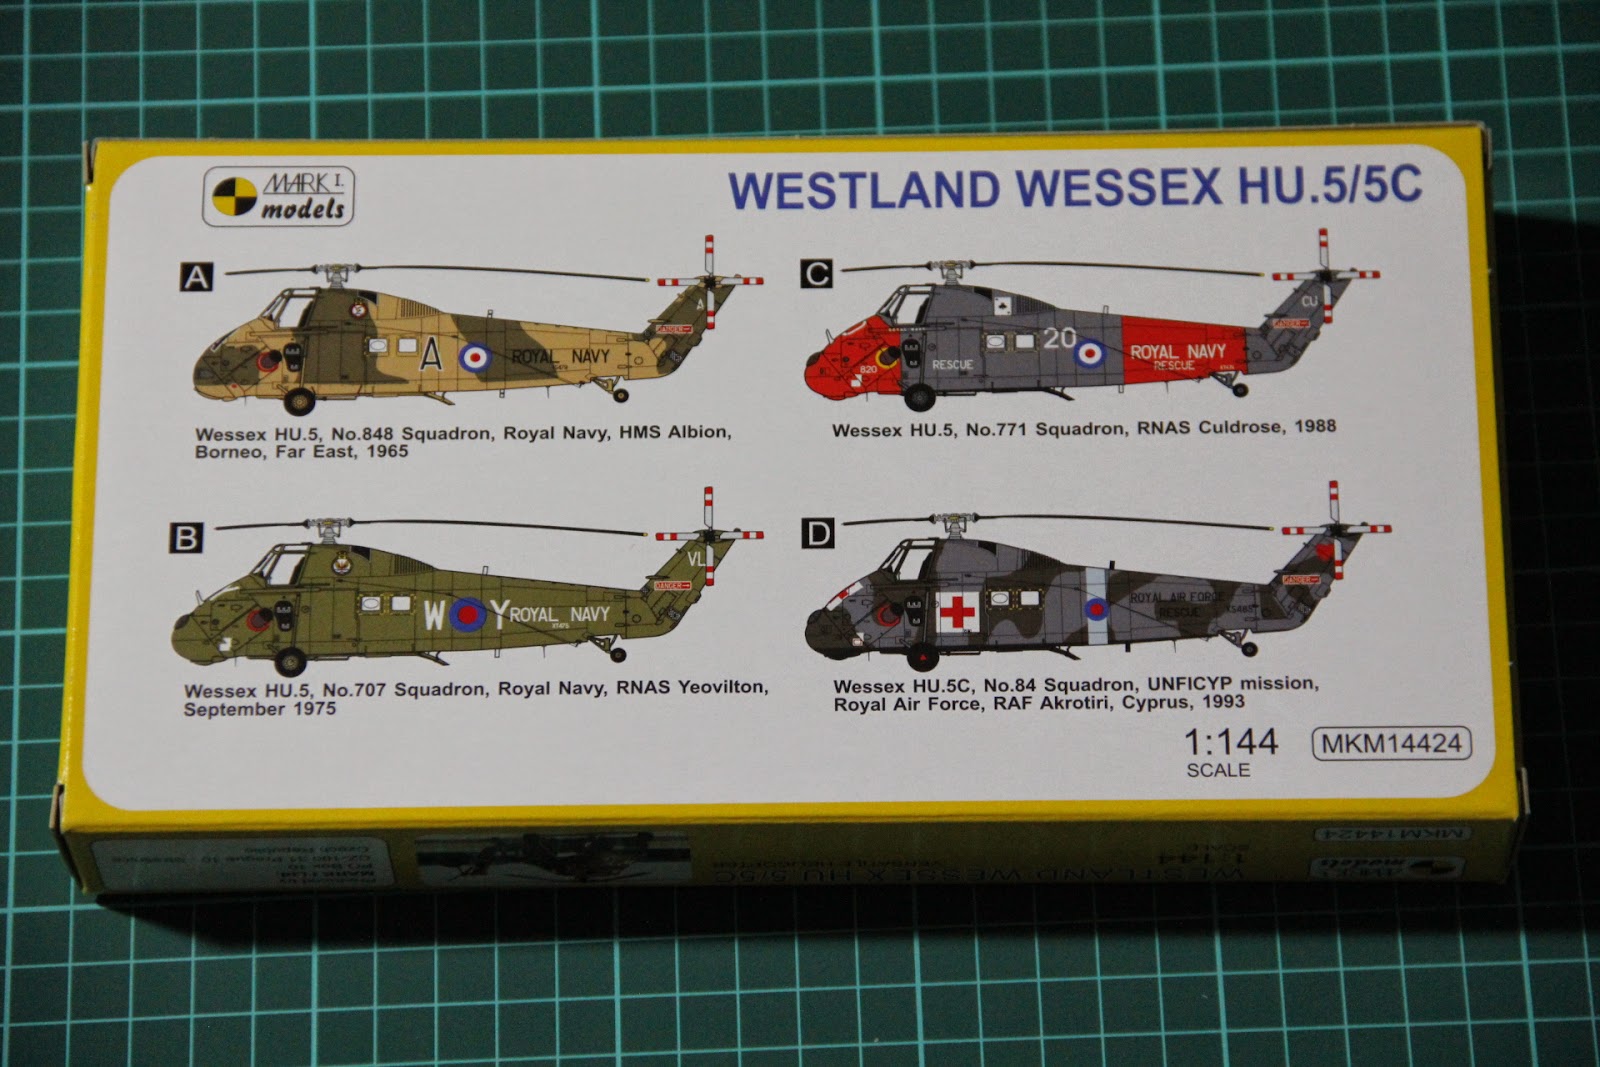 Mark I Models 1/144 Westland Wessex HU.5/5C (MKM14424) - DetailScaleView1600 x 1067